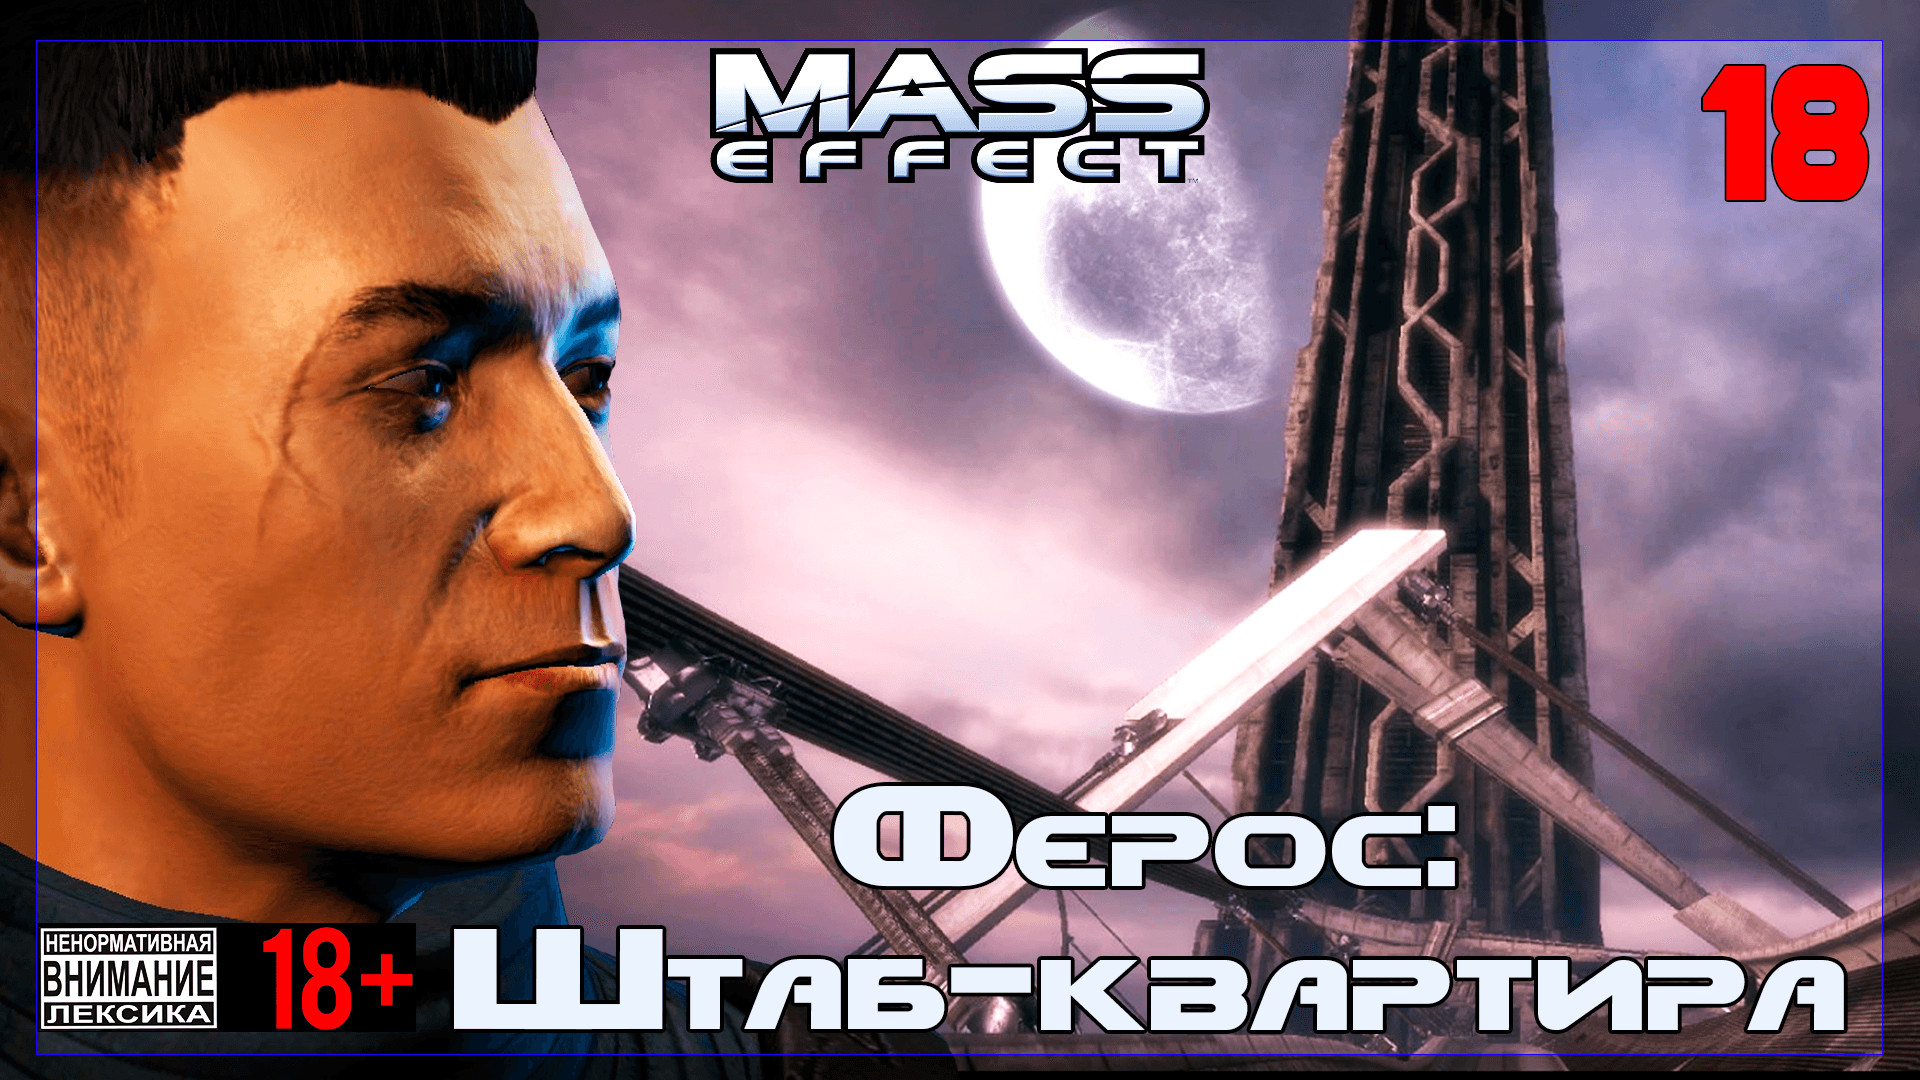 ? Mass Effect / Original #18 Ферос: Штаб-квартира "ЭкзоГени"